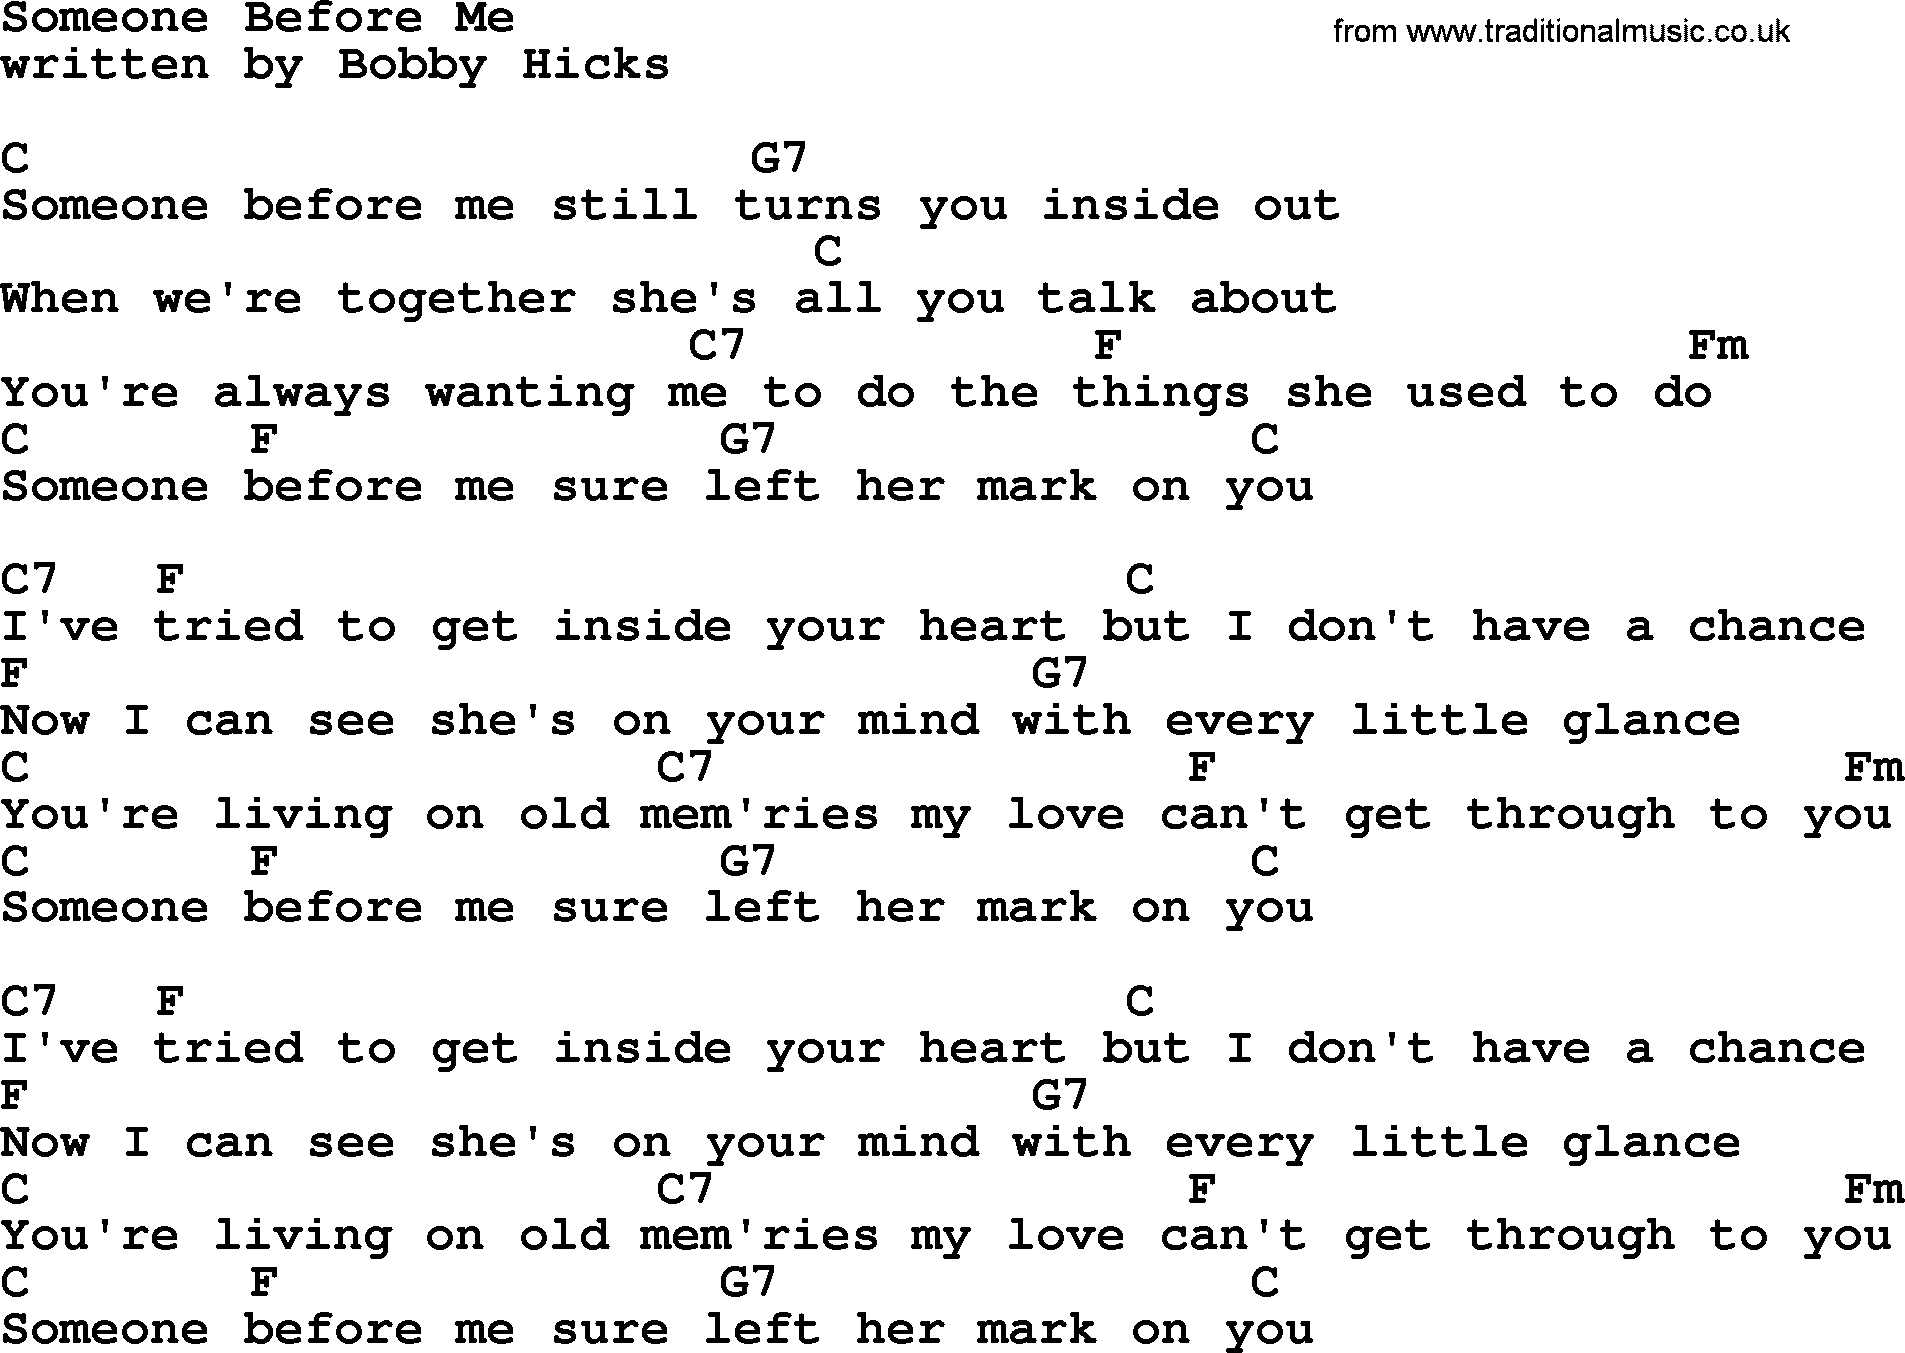 Loretta Lynn song: Someone Before Me lyrics and chords